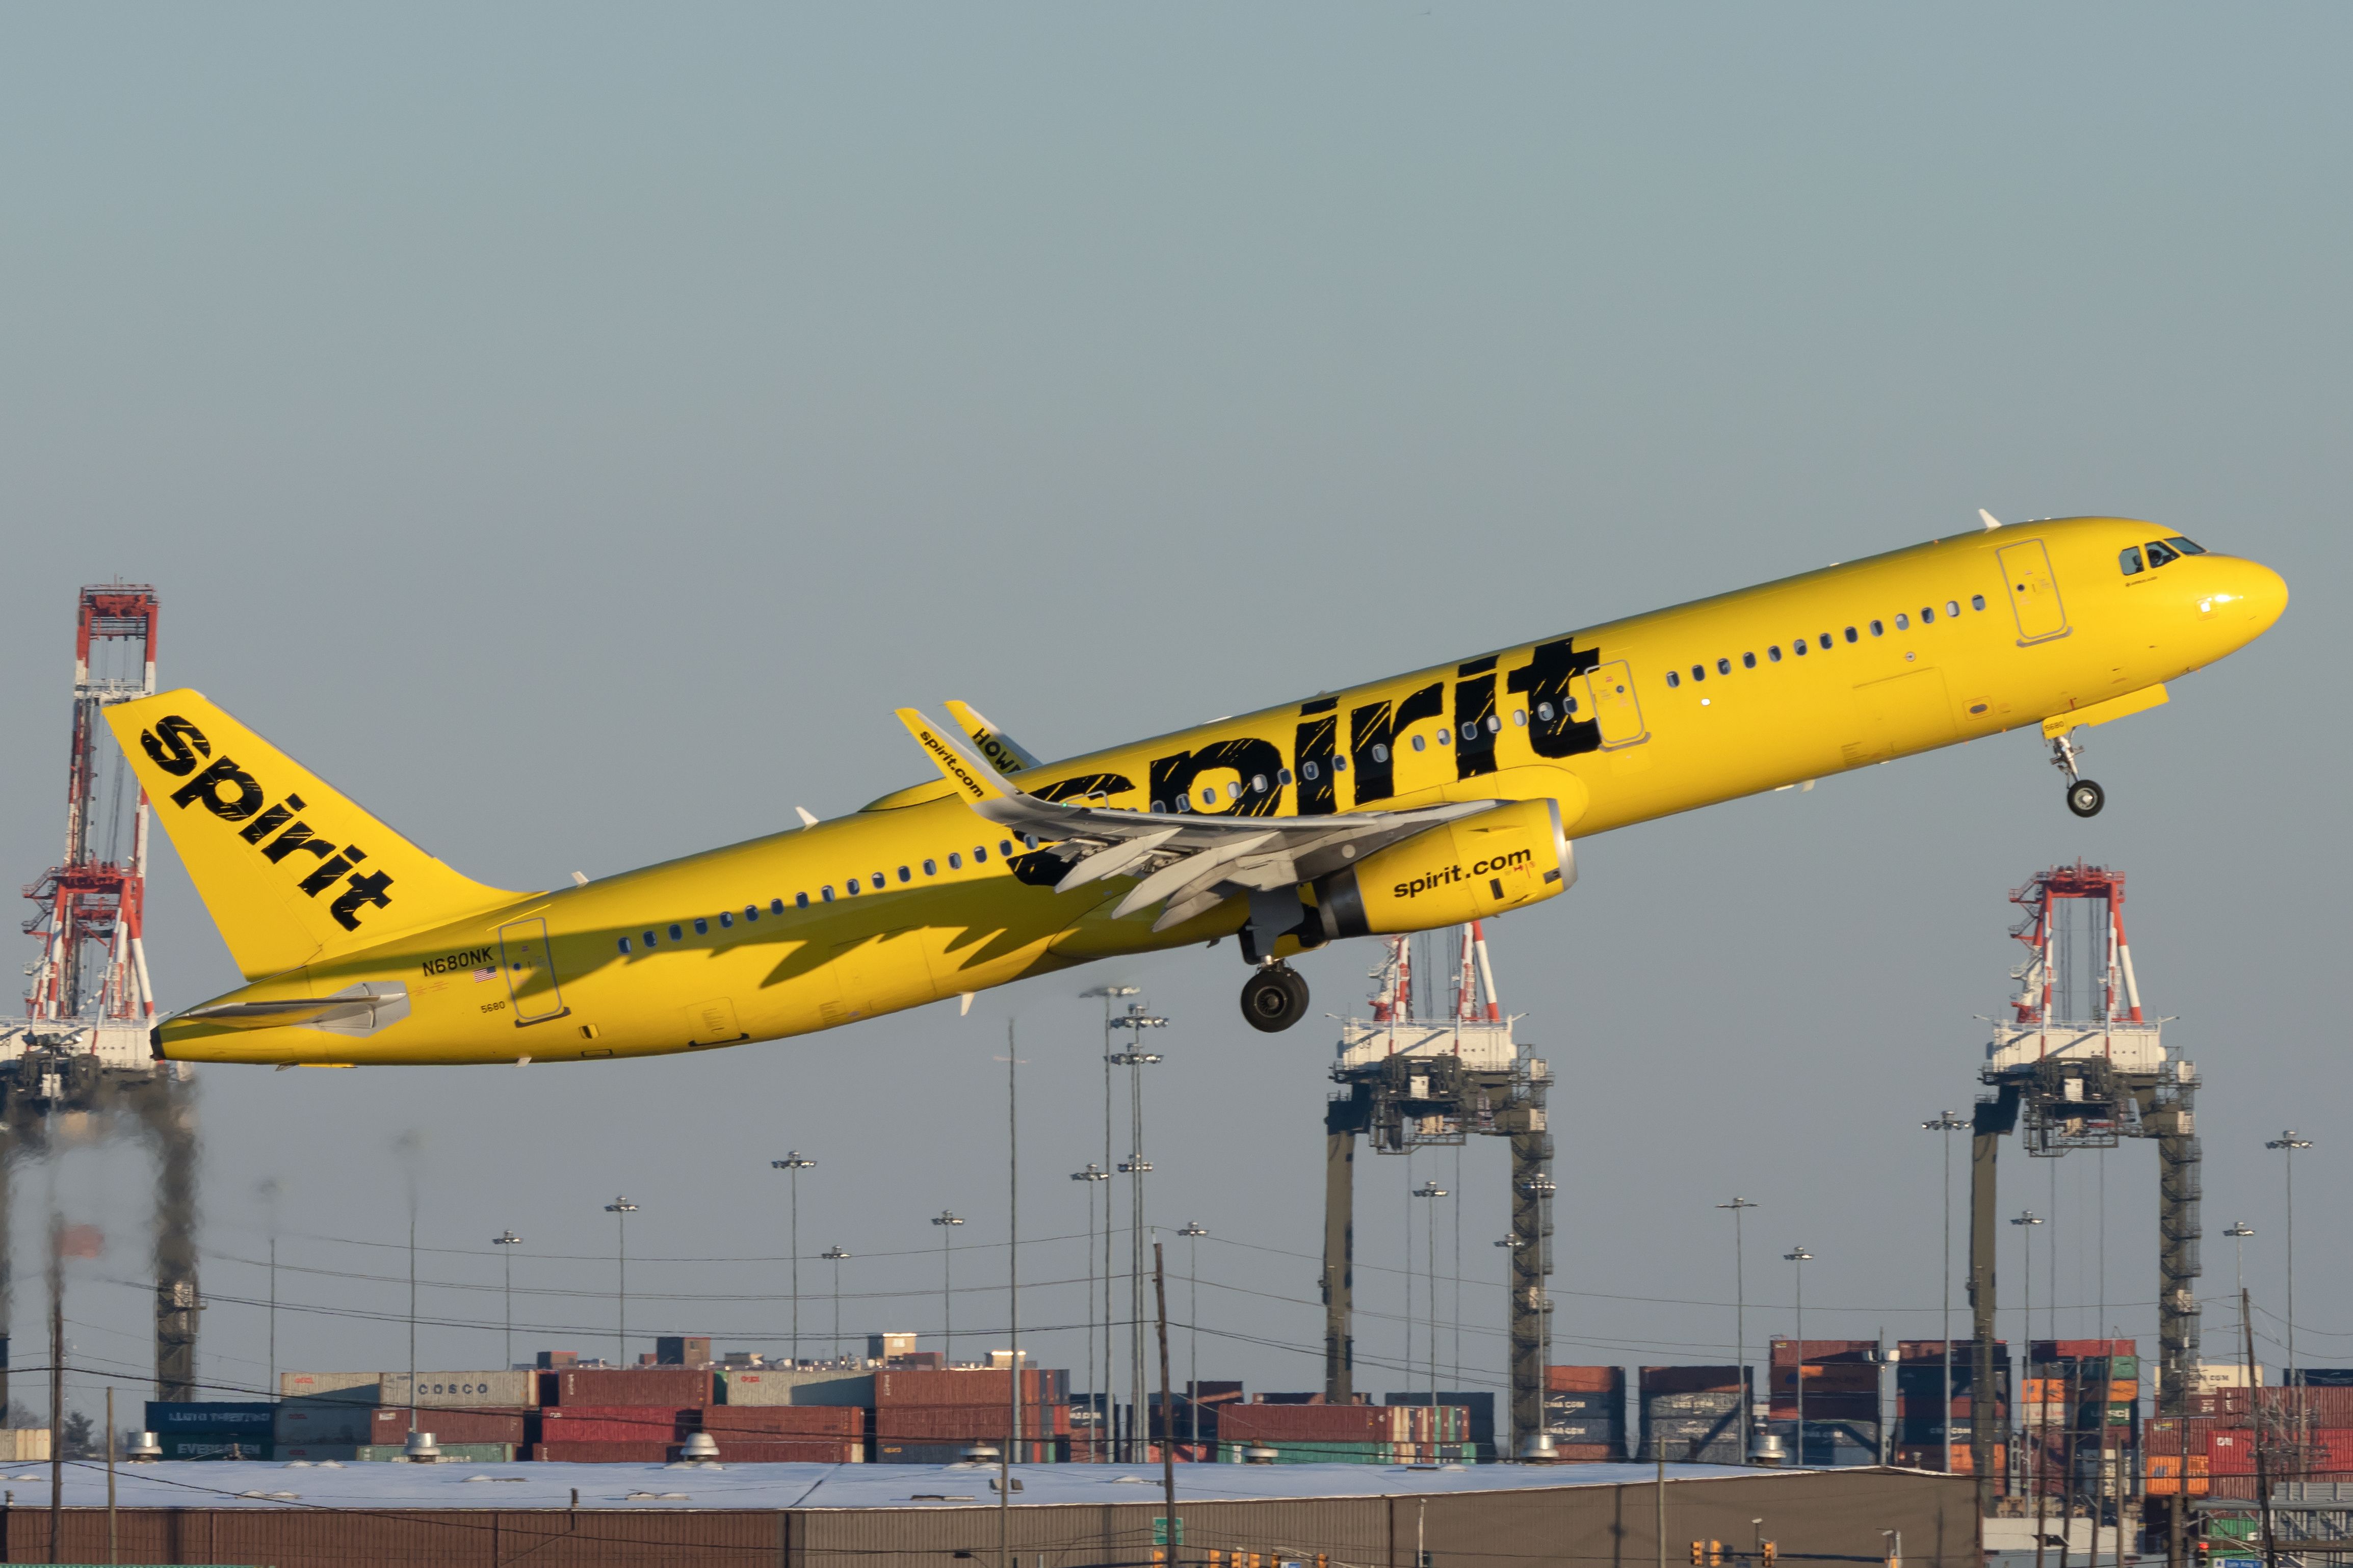 Spirit Airways Reviews This autumn 2022 Web Loss Of $270.7 Million